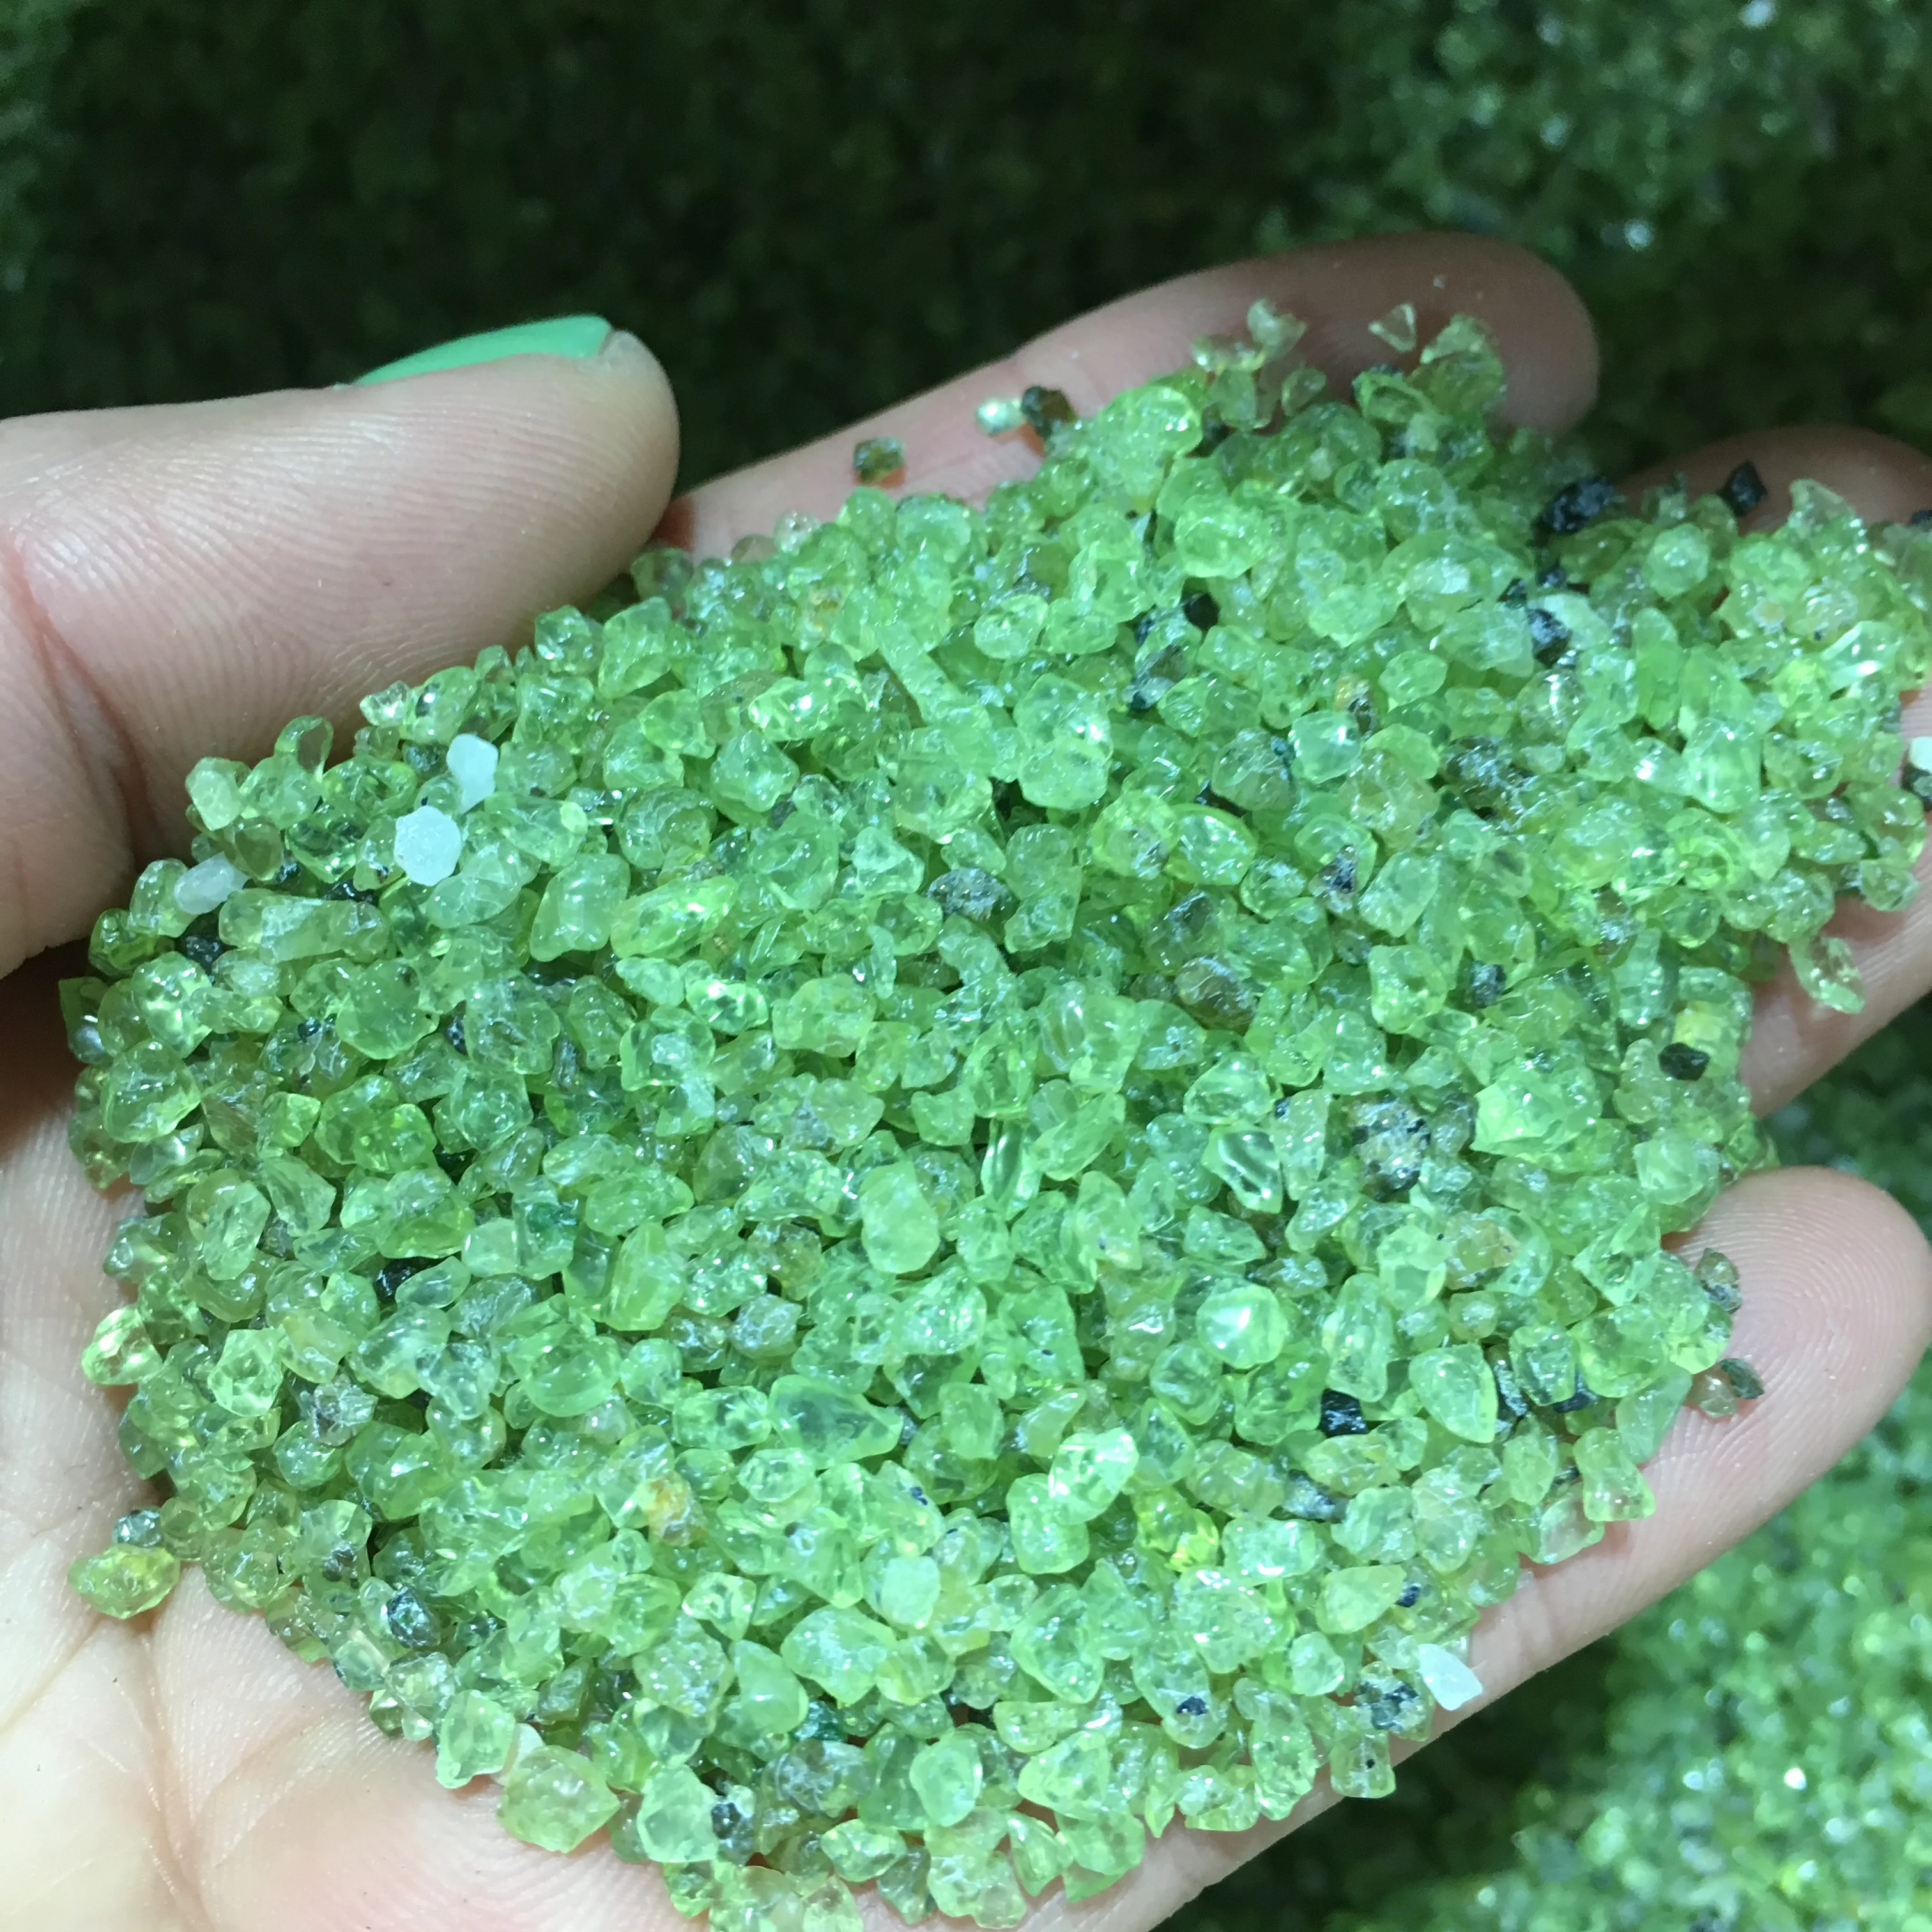 

100g Natural Stone Mineral Specimen Green Color Quartz Olivine Gravel Crystals and Stones Healing Healing Crystals Home Decor